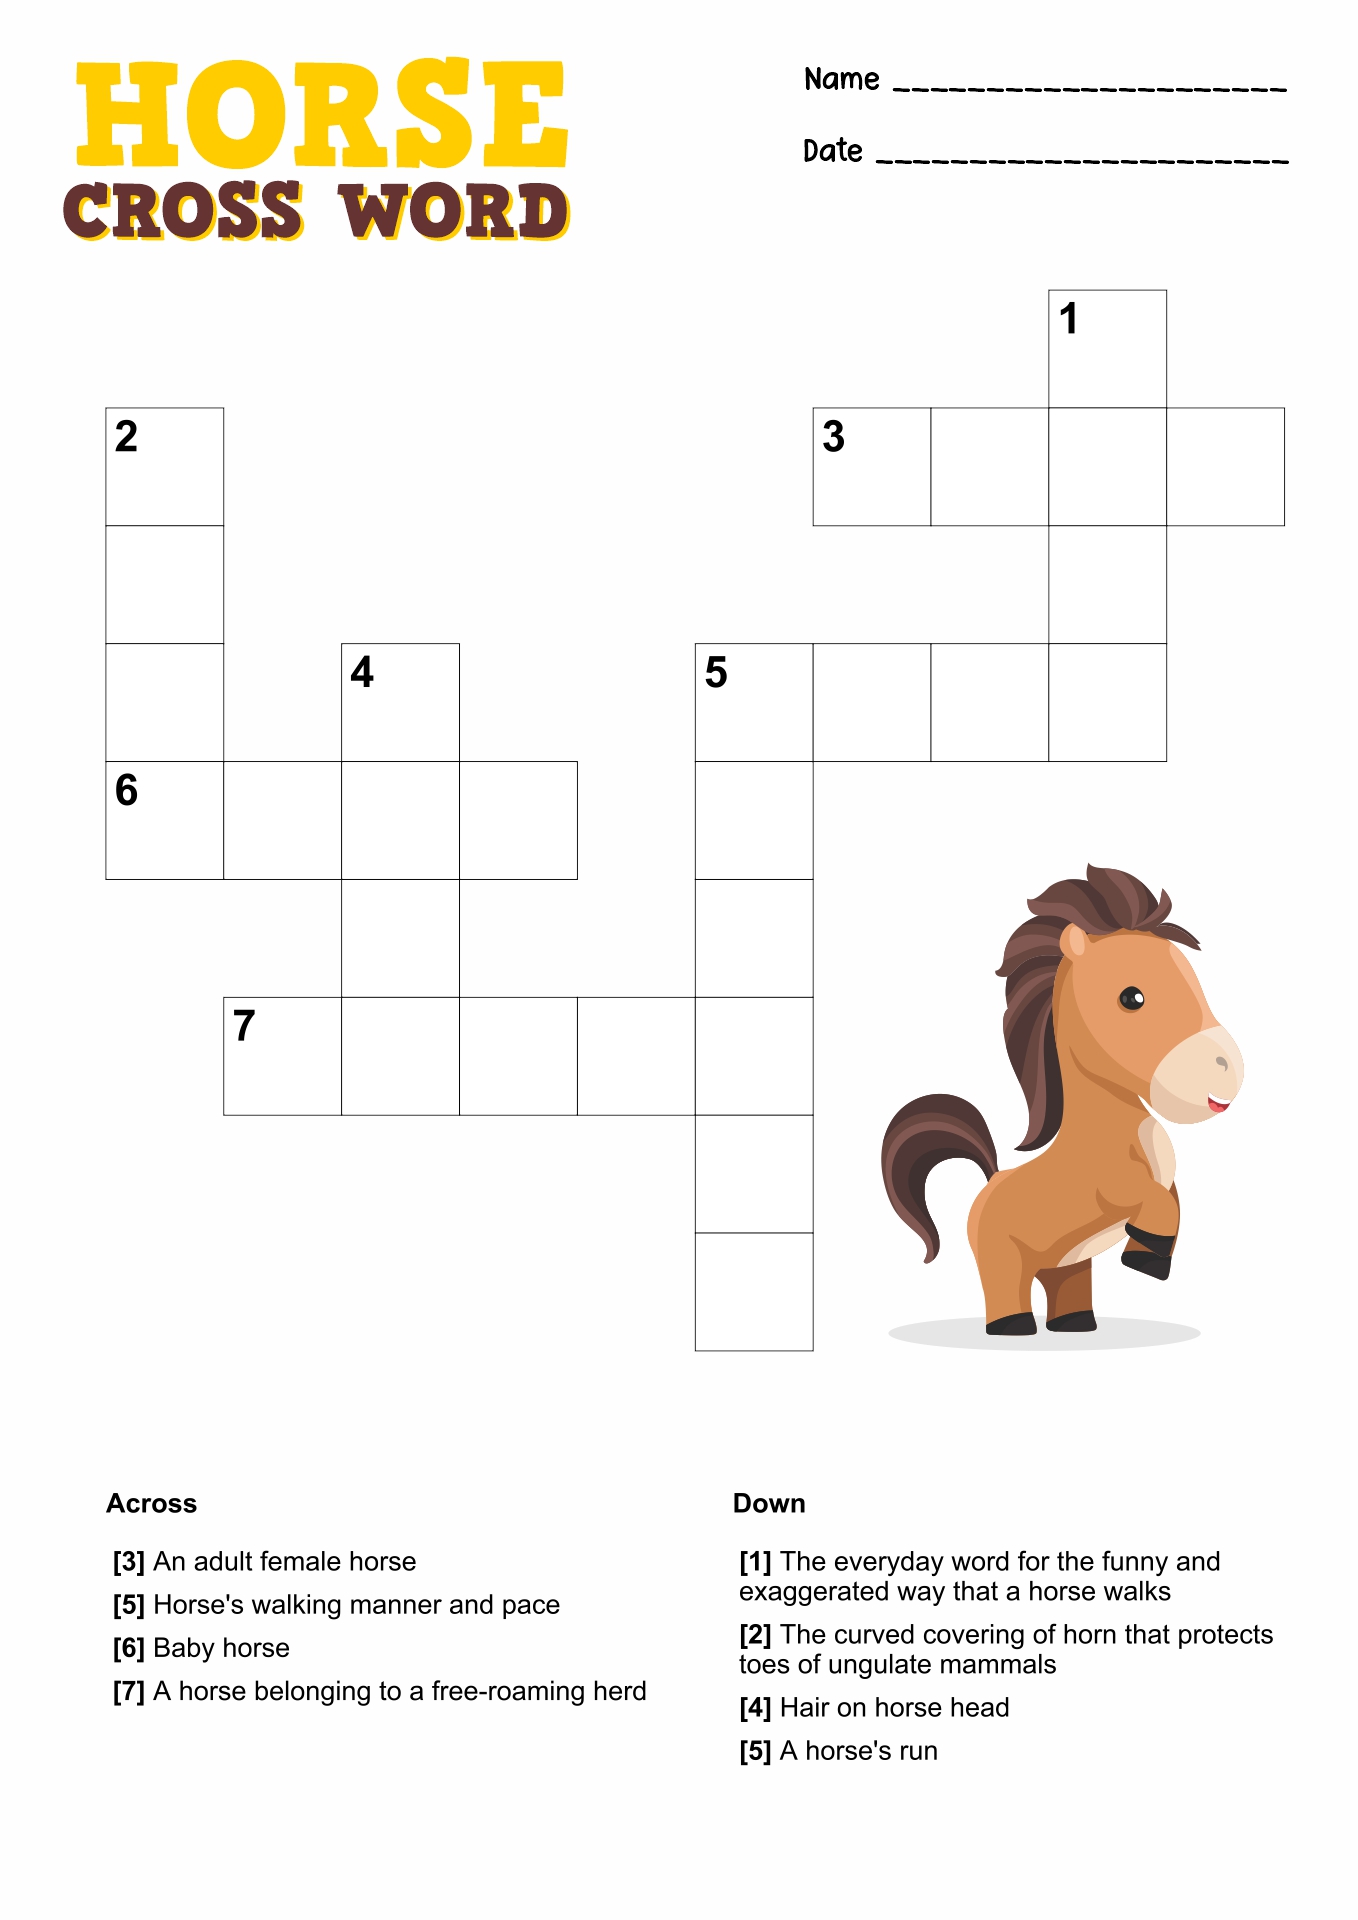 Horse Crossword Puzzle Image